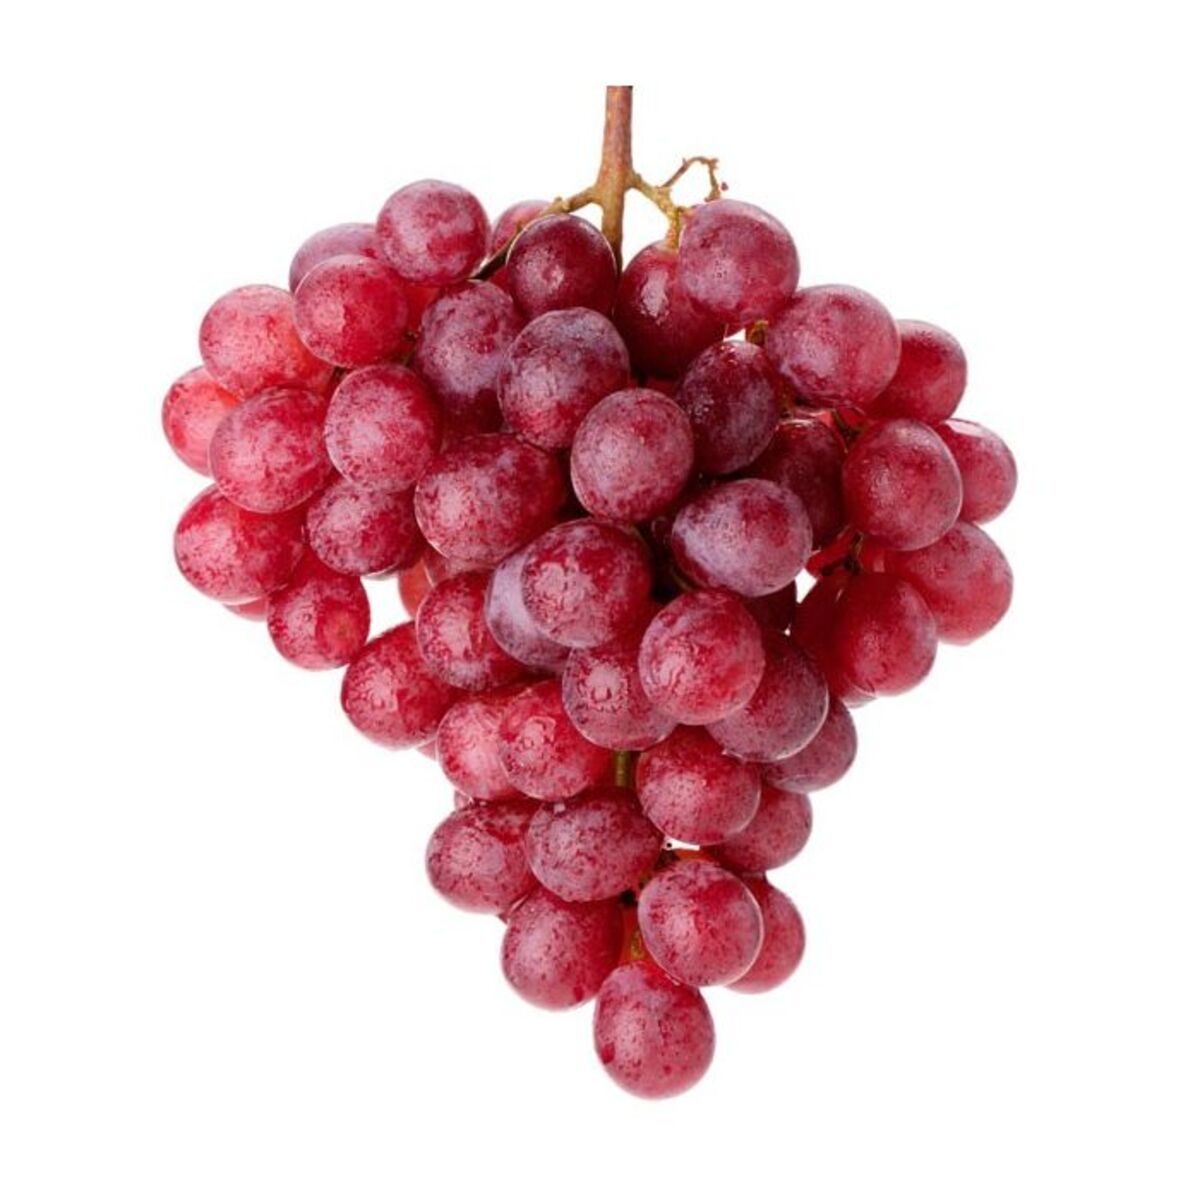 Imported Grape Red Globe (per KG)